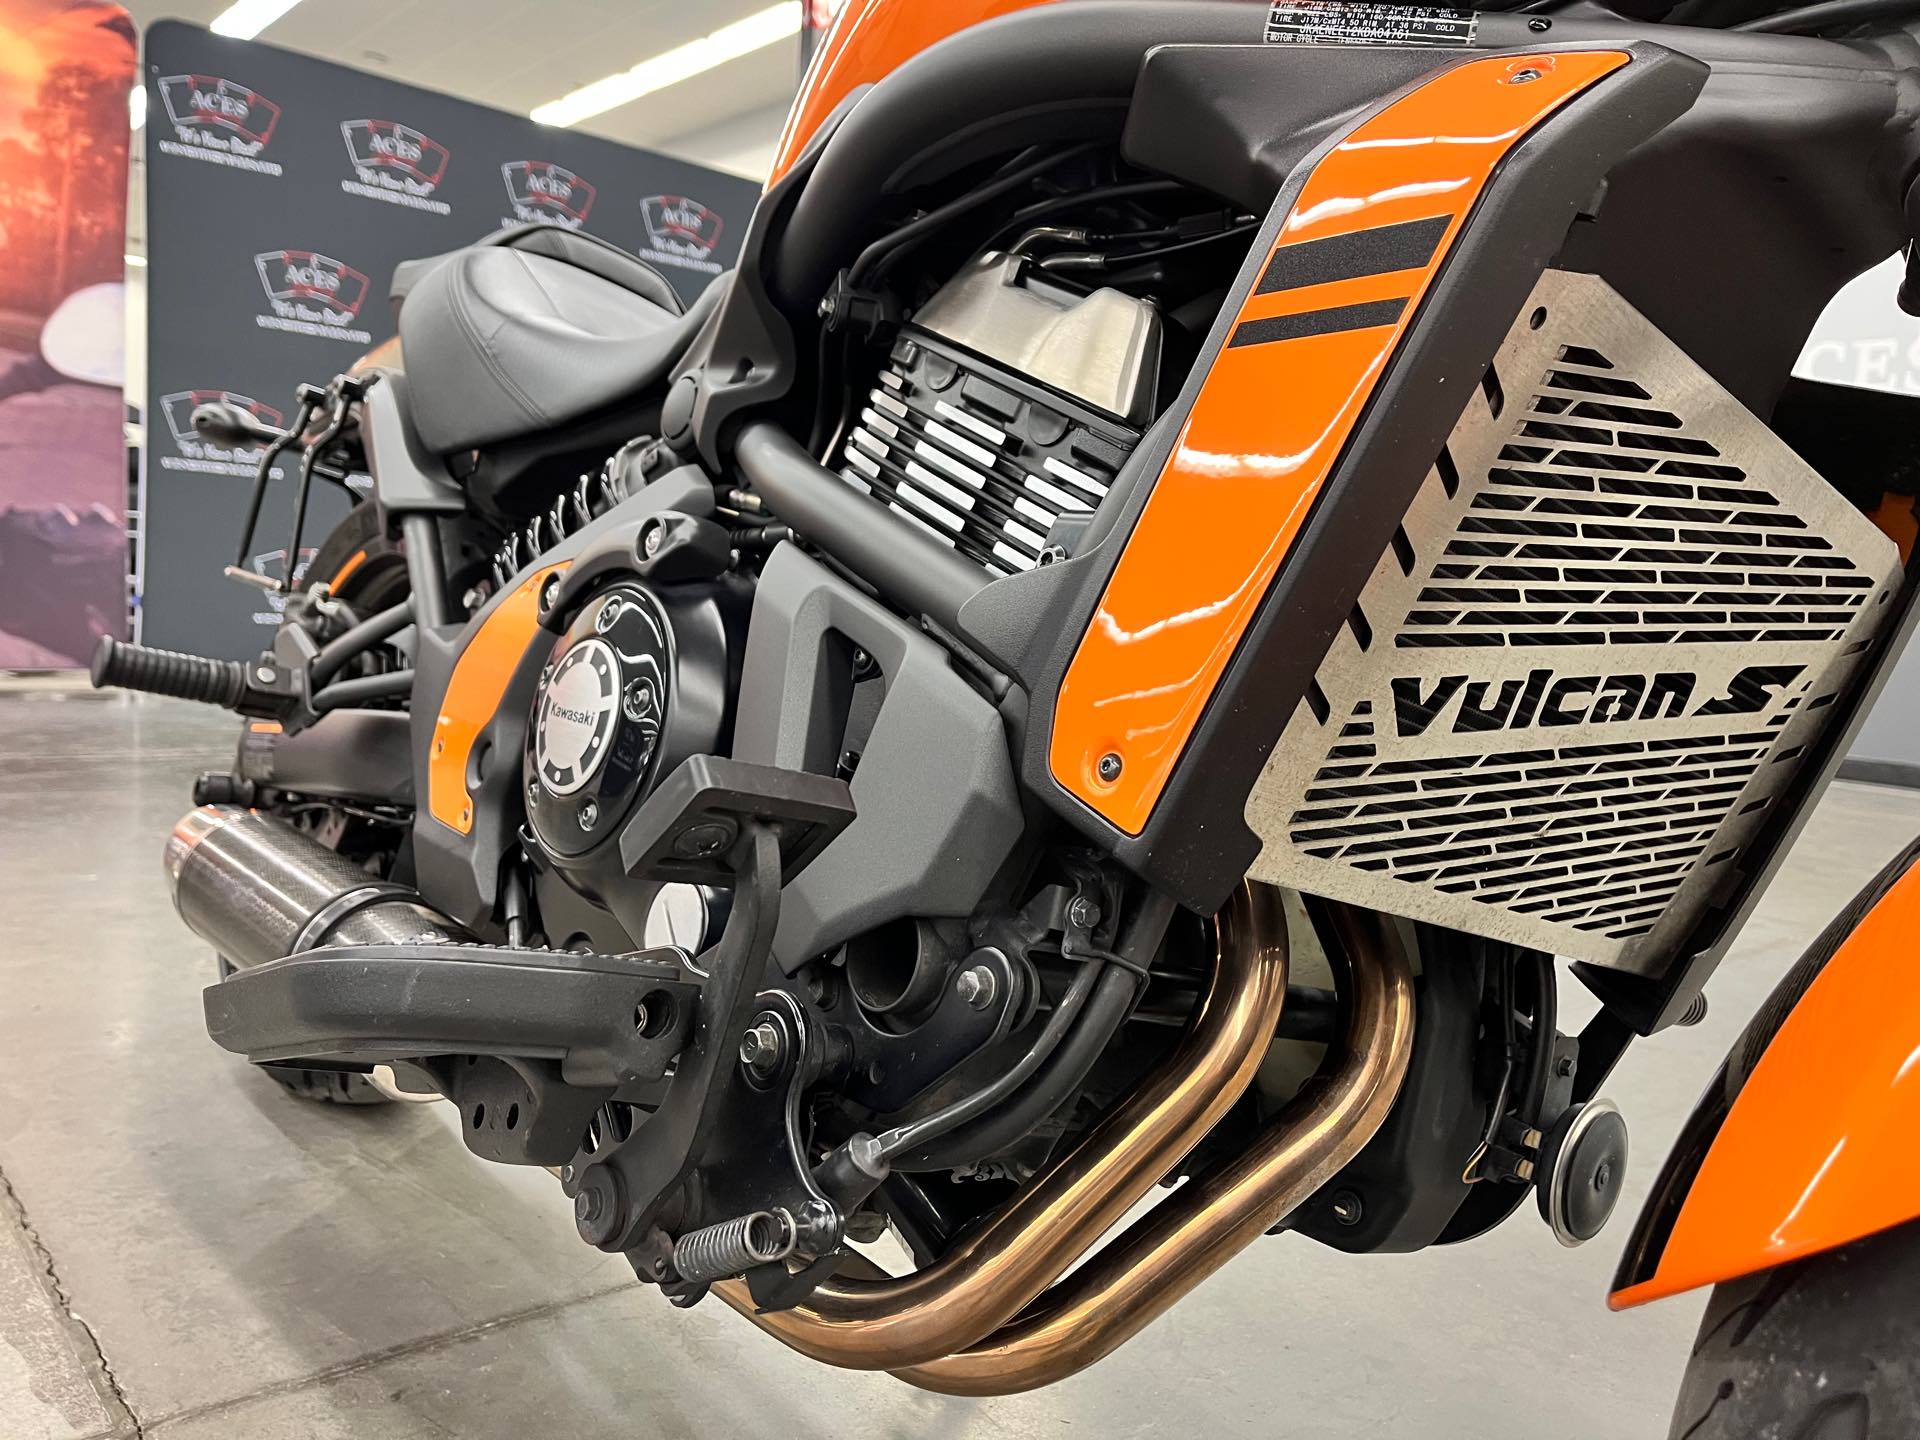 2019 Kawasaki Vulcan S ABS Café at Aces Motorcycles - Denver